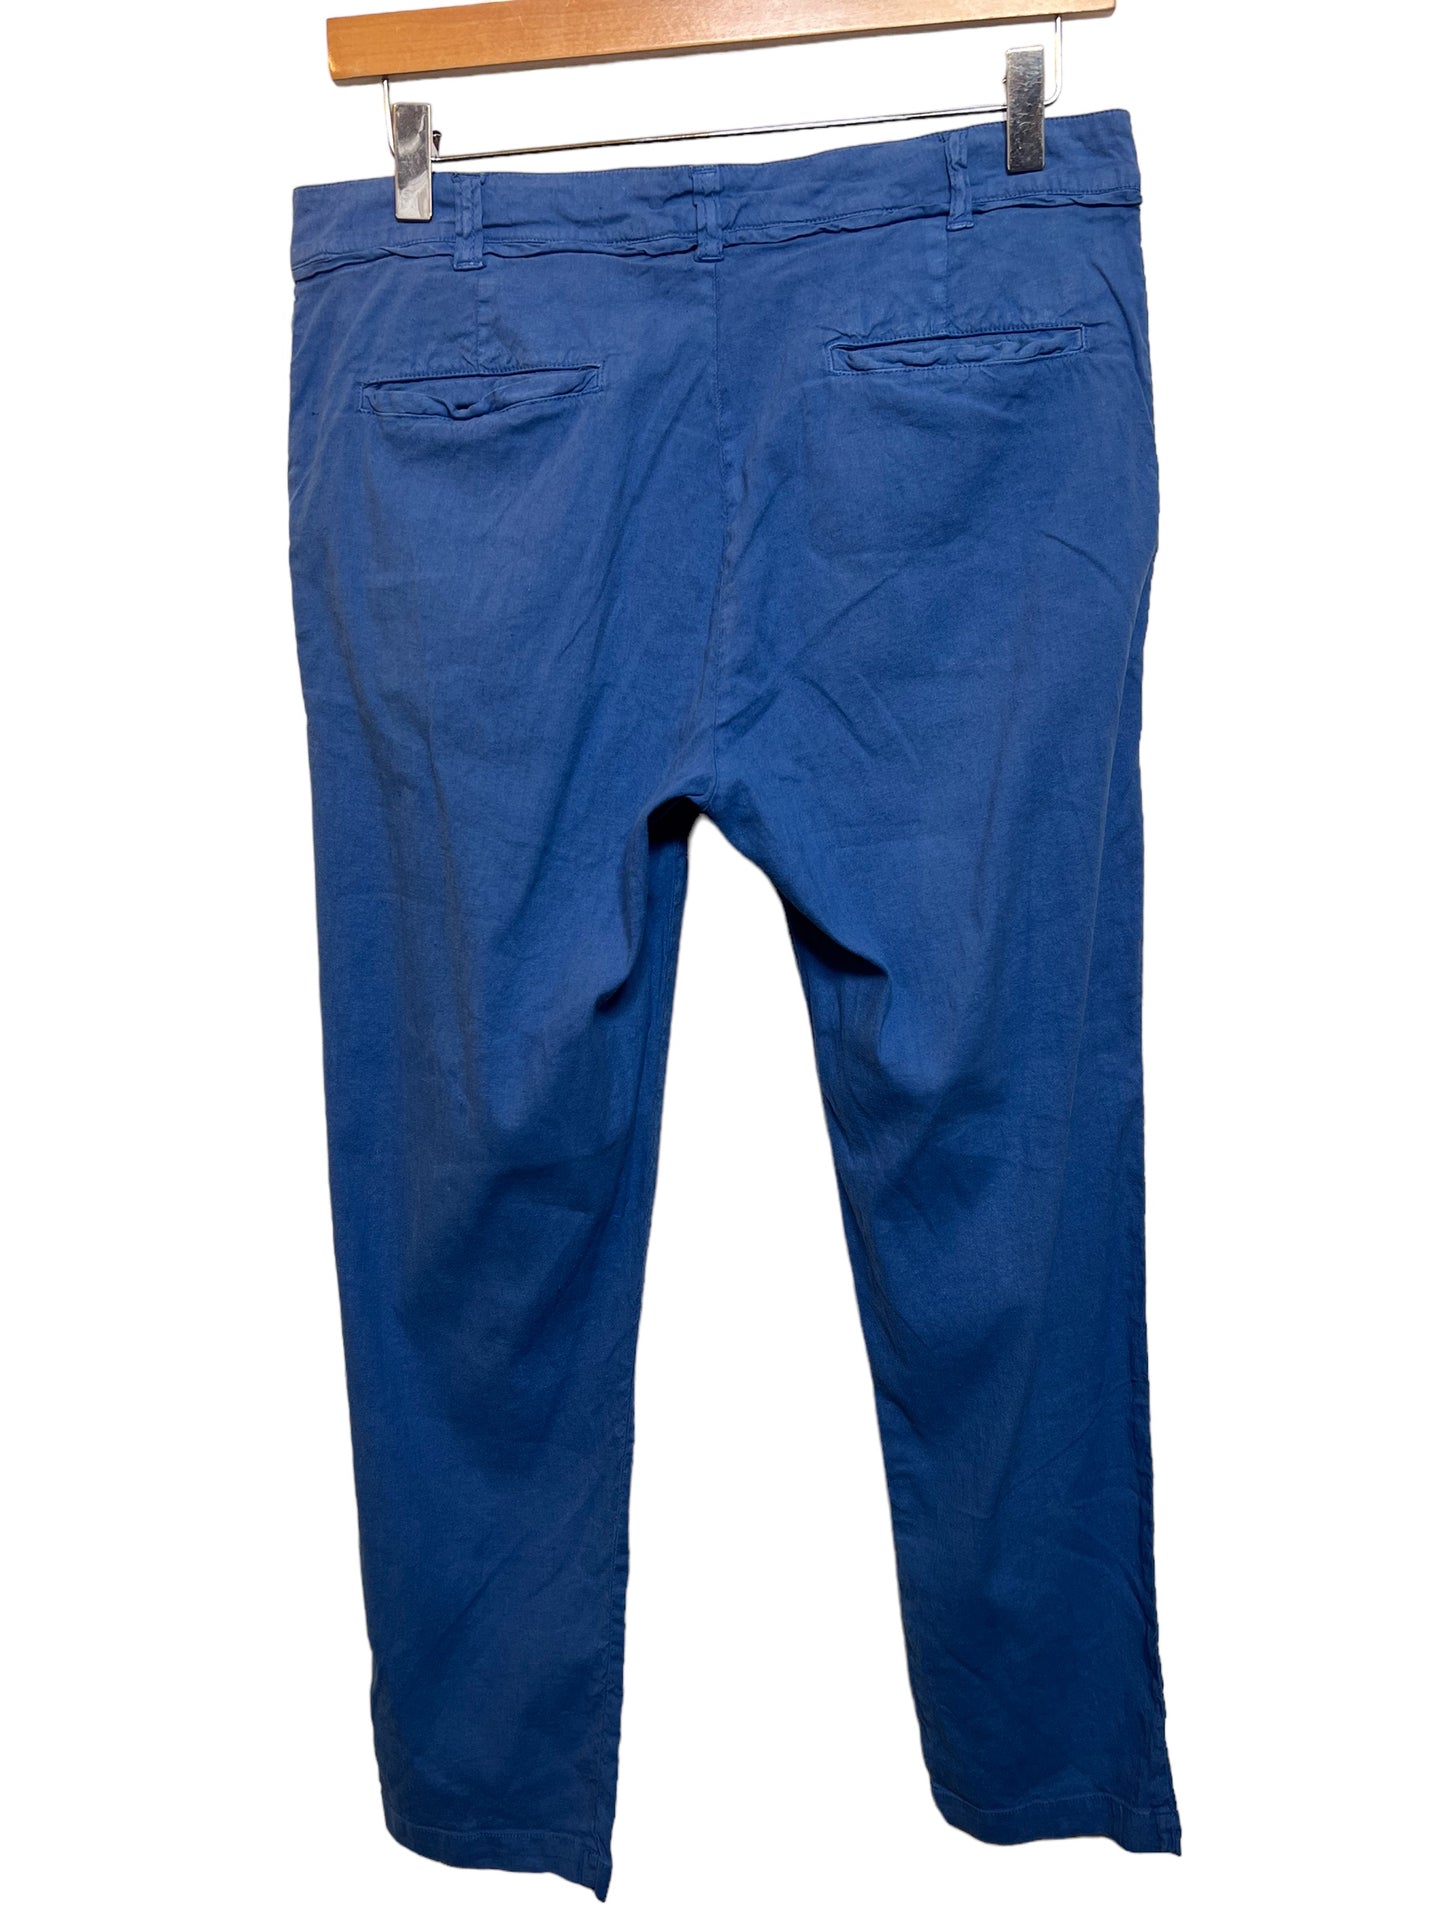 Blue Men’s Linen Trousers (Size W30)